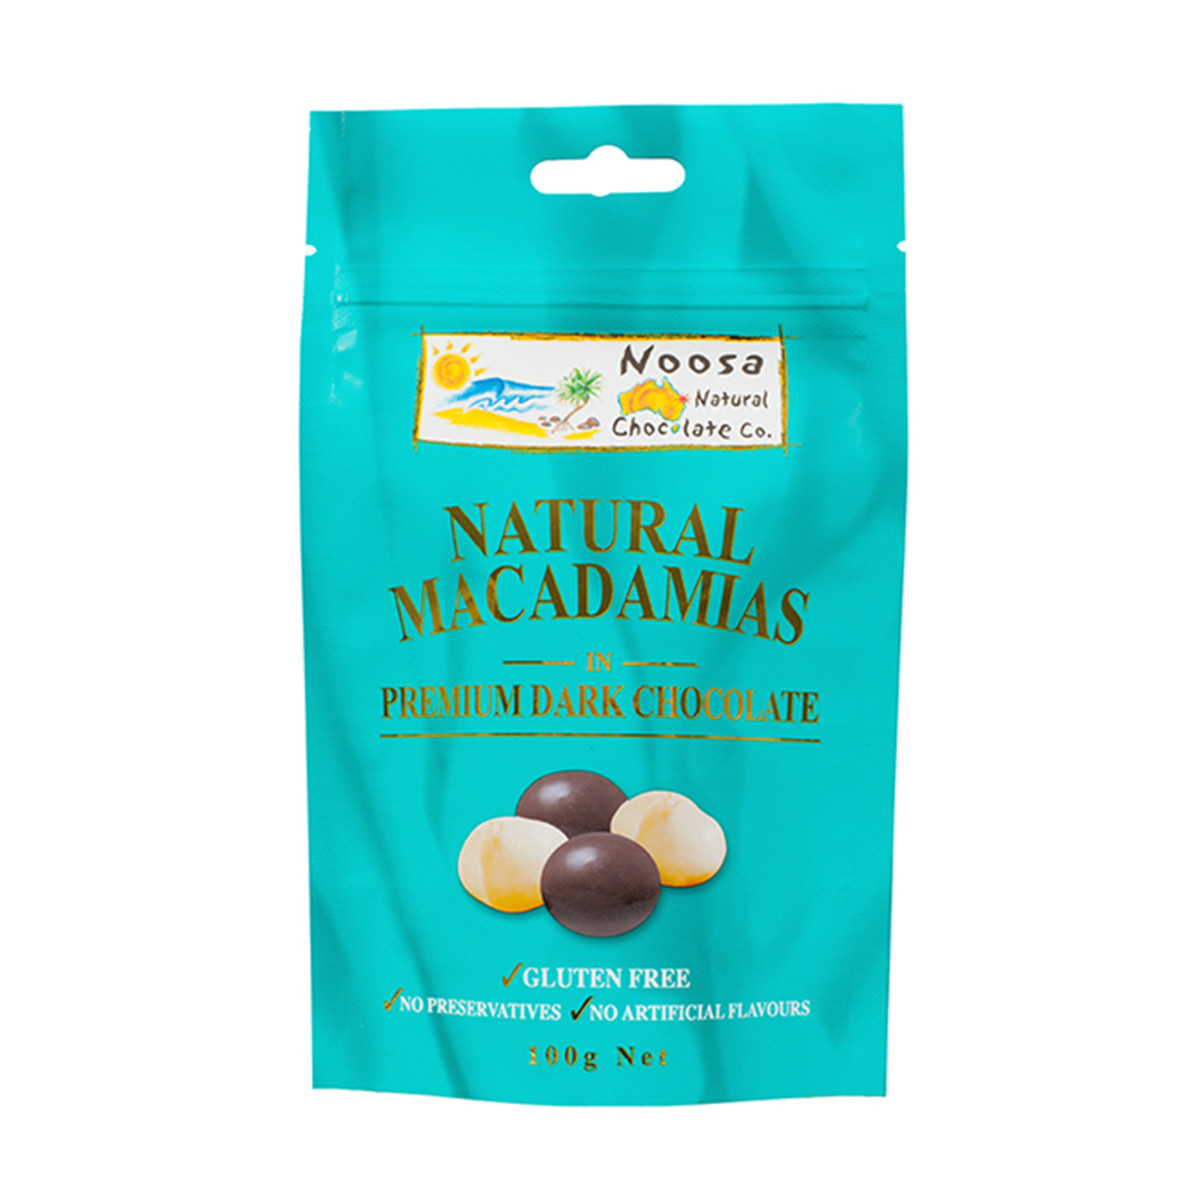 NOOSA NATURAL CHOC CO - Macadamias Dark Chocolate